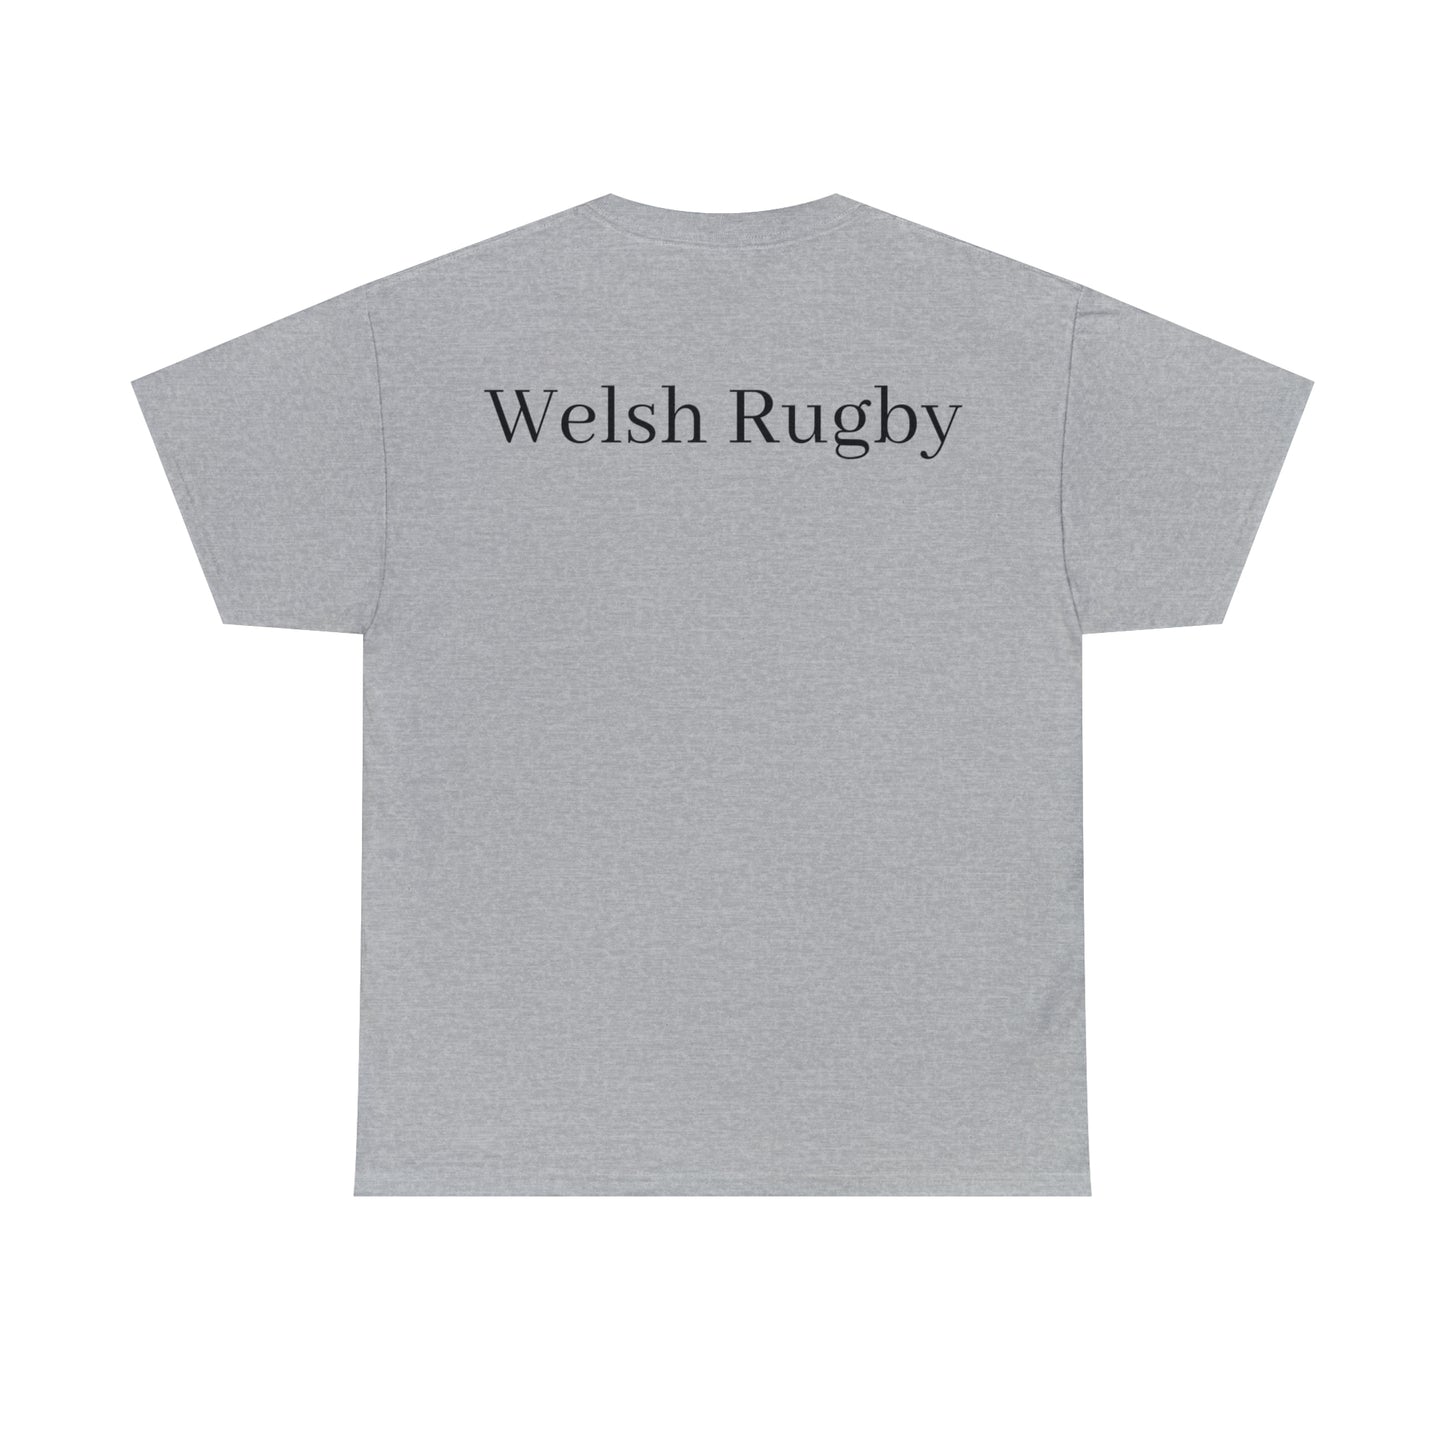 Wales Celebrating - light shirts